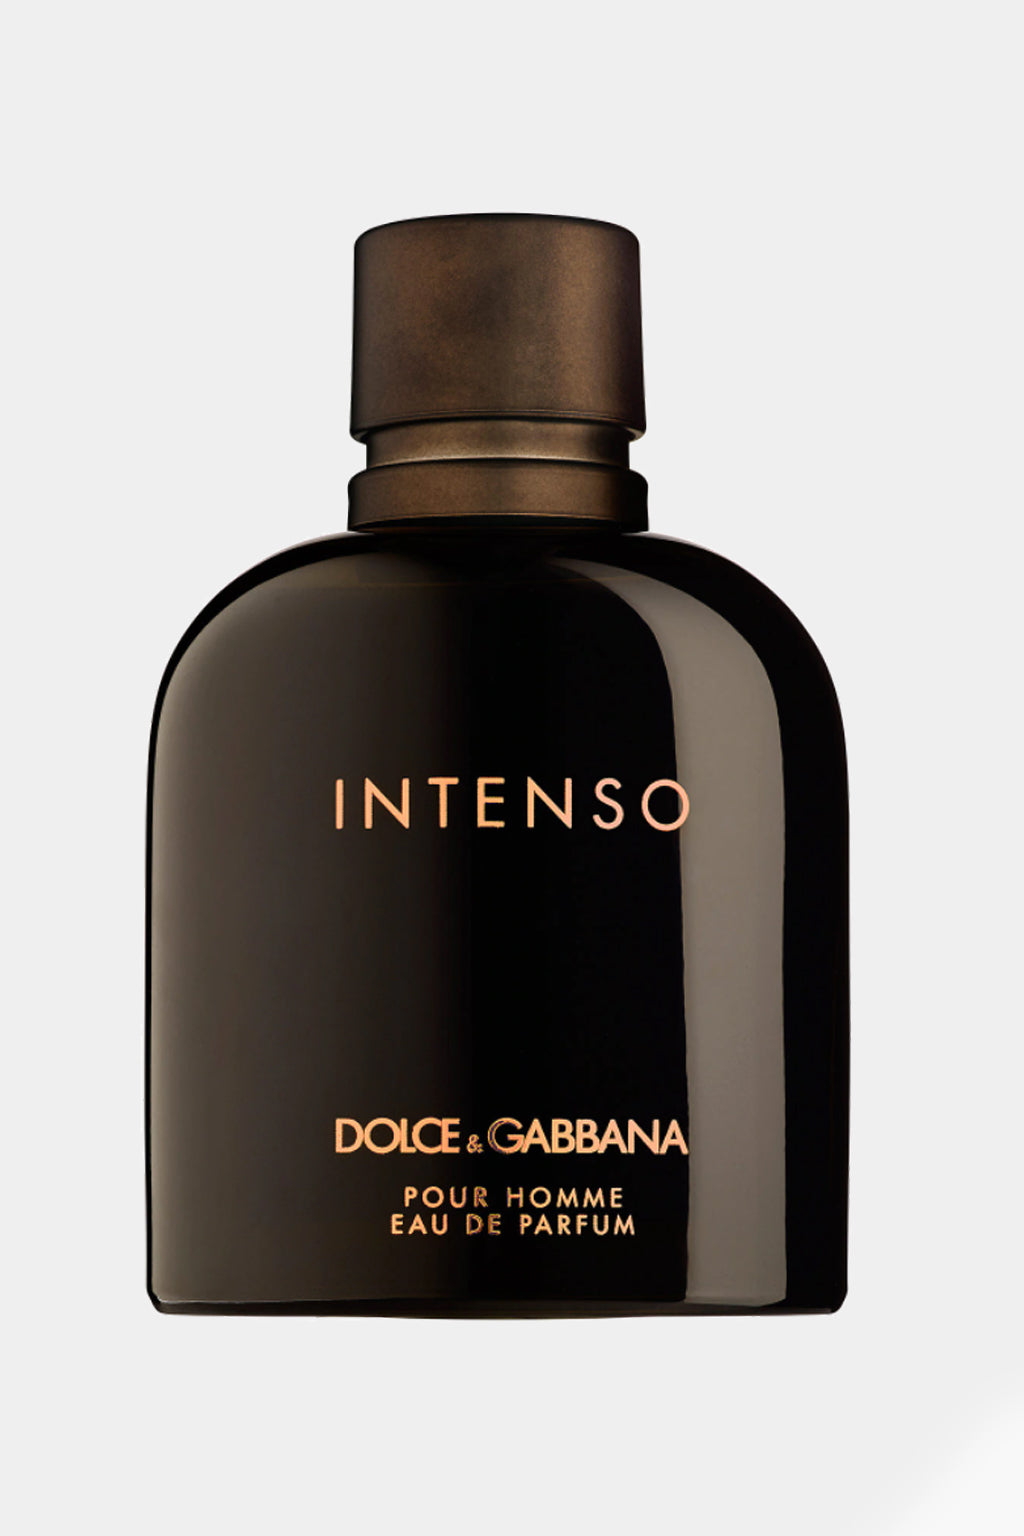 Dolce & Gabbana - Intenso Eau de Parfum